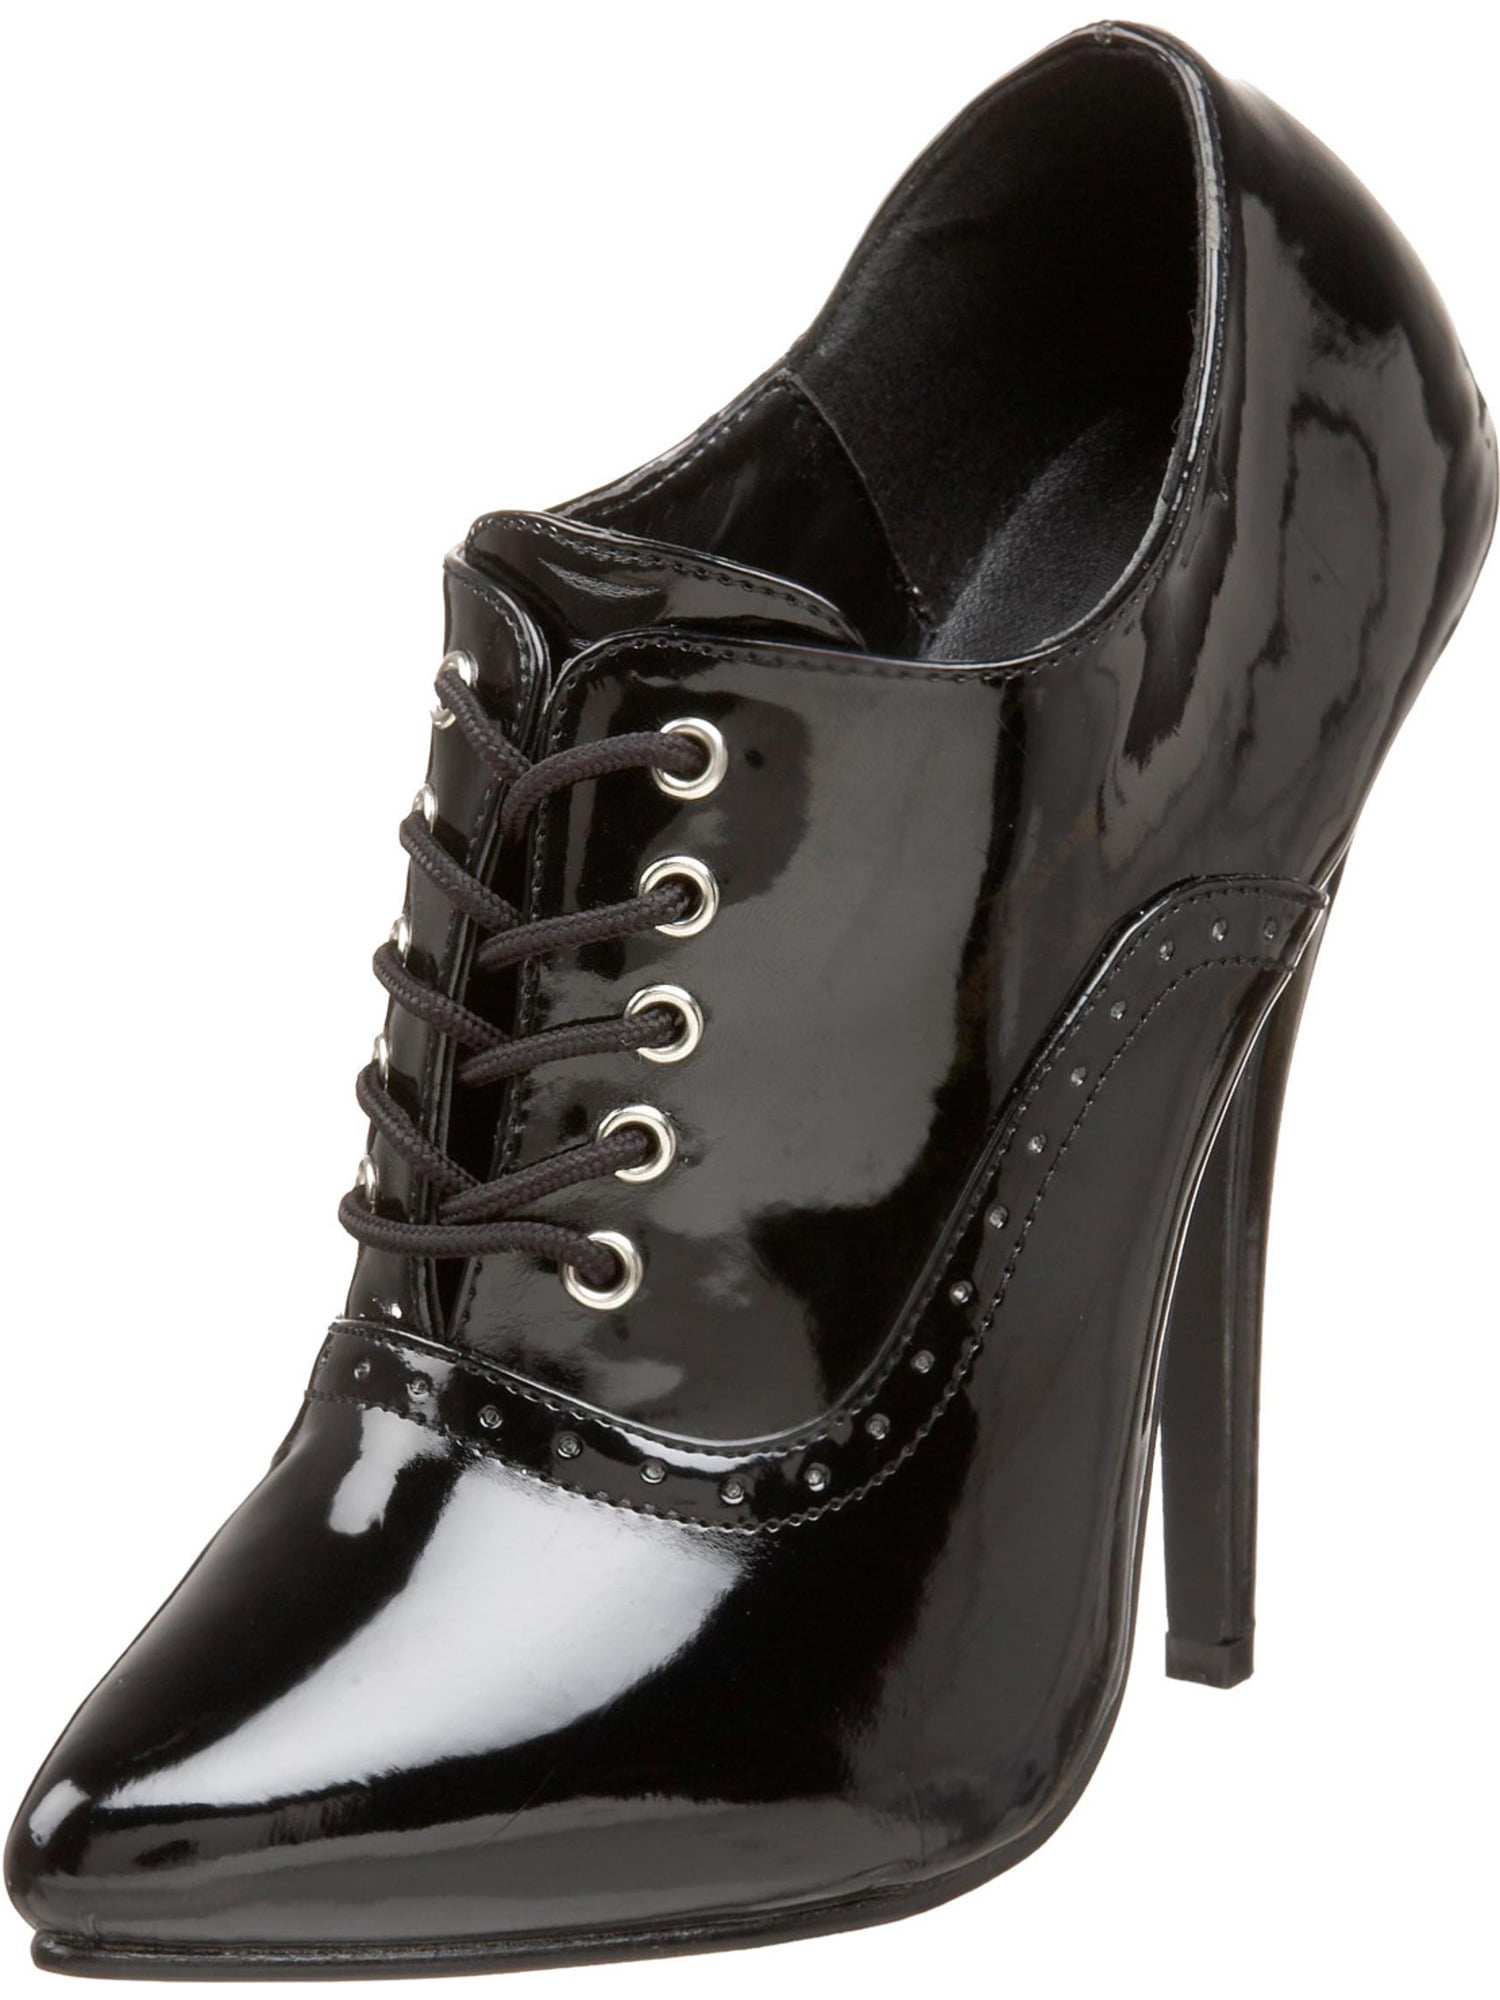 Buy > high heels oxford > in stock